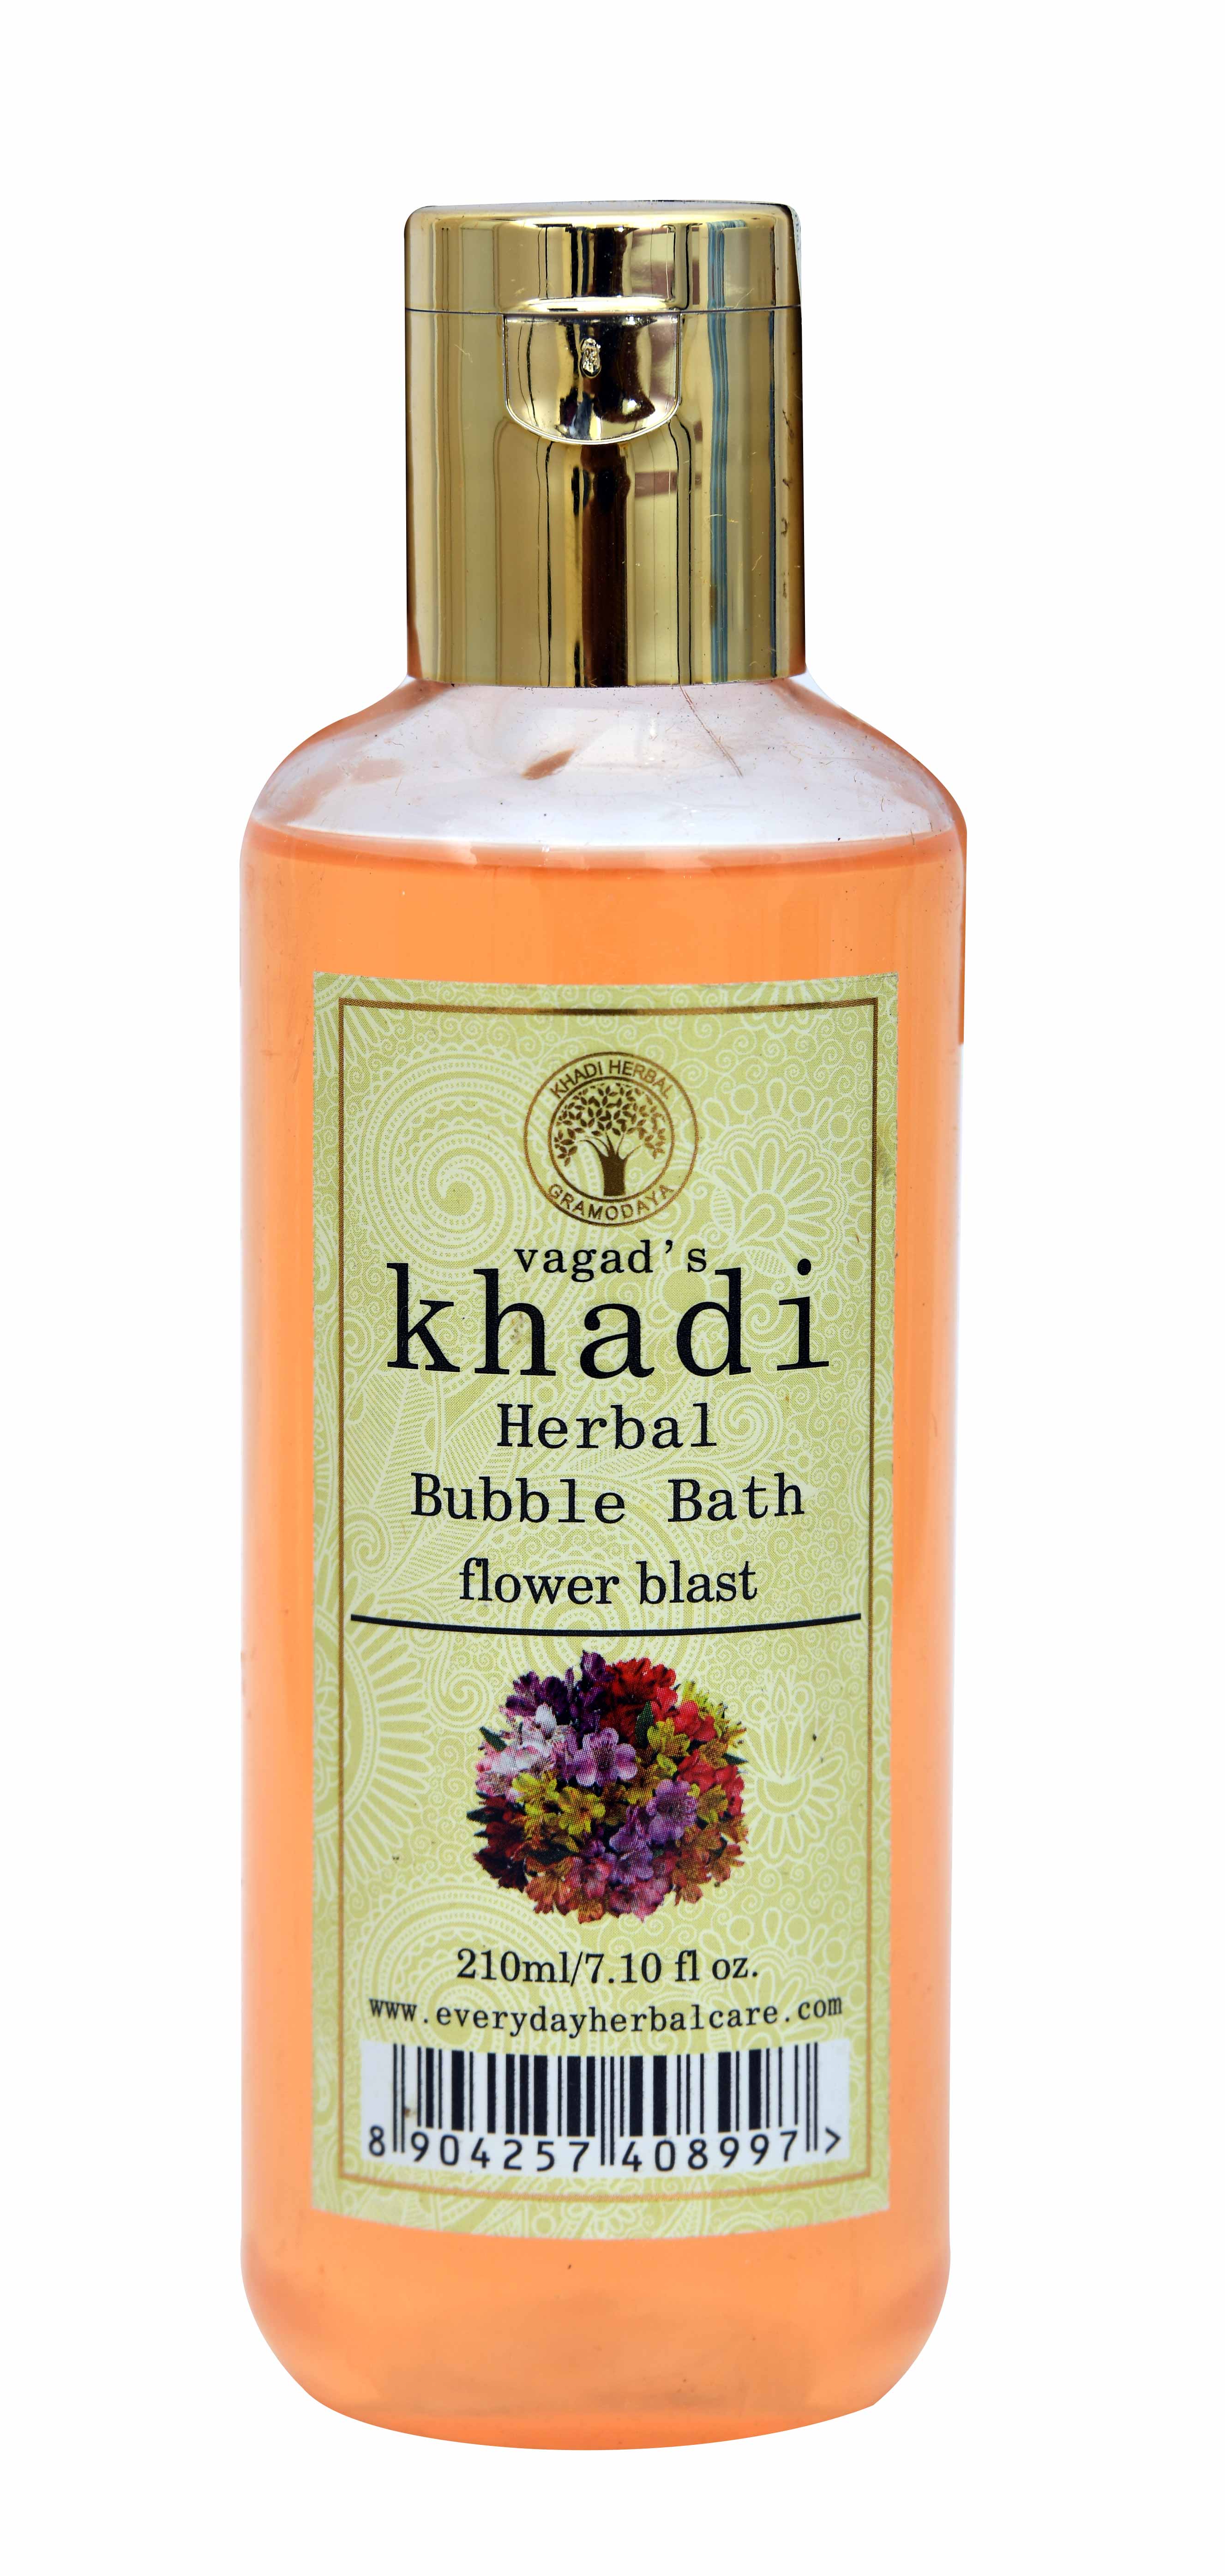 Vagad's Khadi Flower Blast Bubble Bath